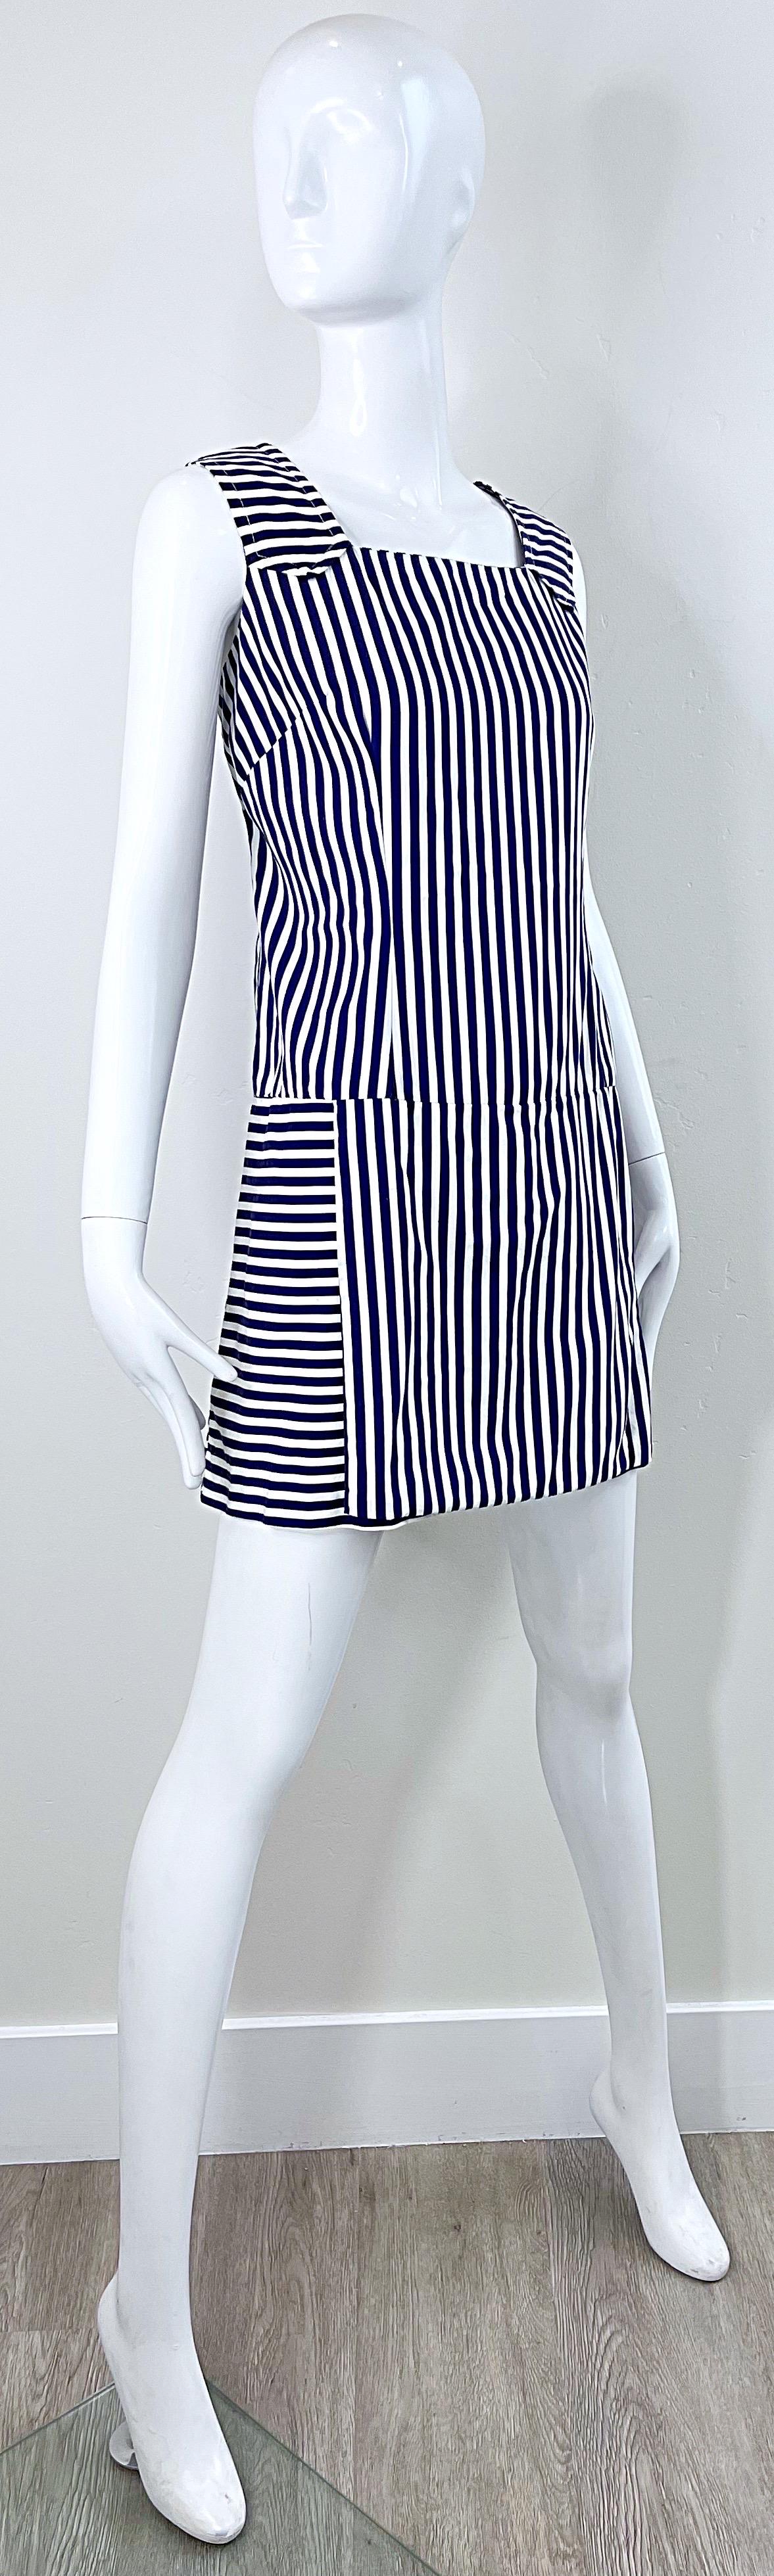 Gris 1960s Romper Large Size Navy + White Striped Cotton Vintage 60s Skort Dress en vente